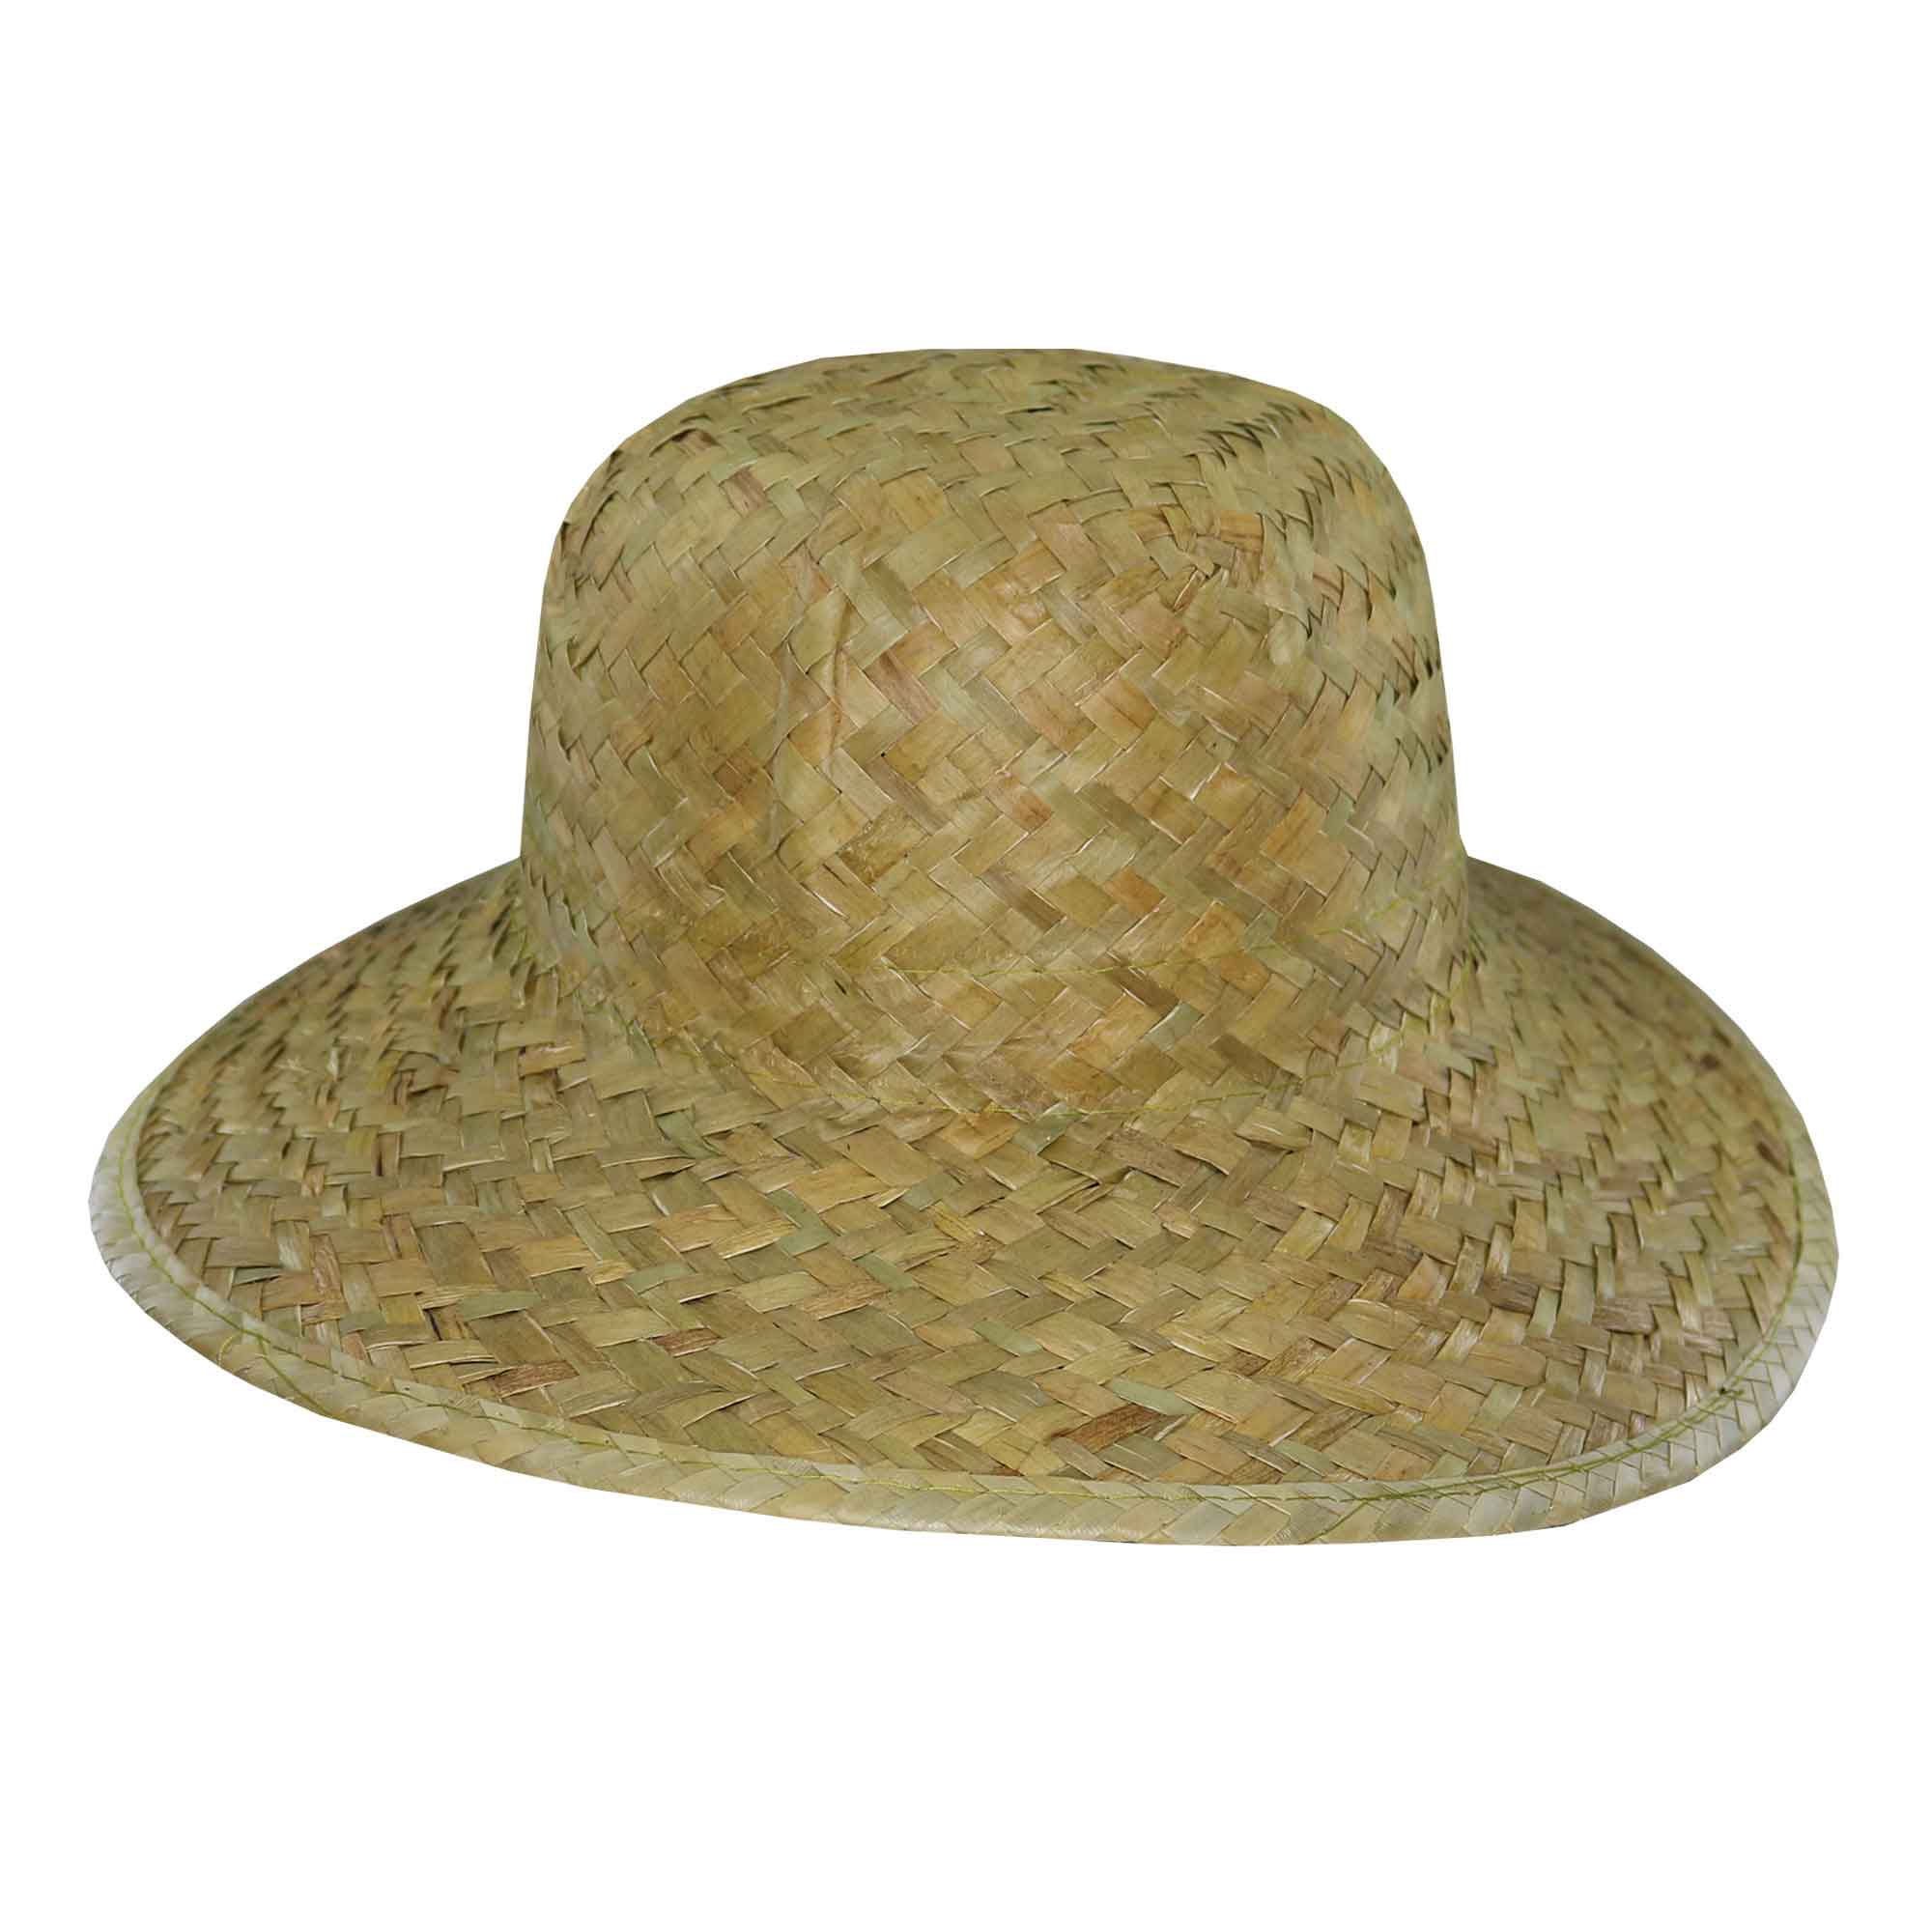 Sombrero safari de paja natural